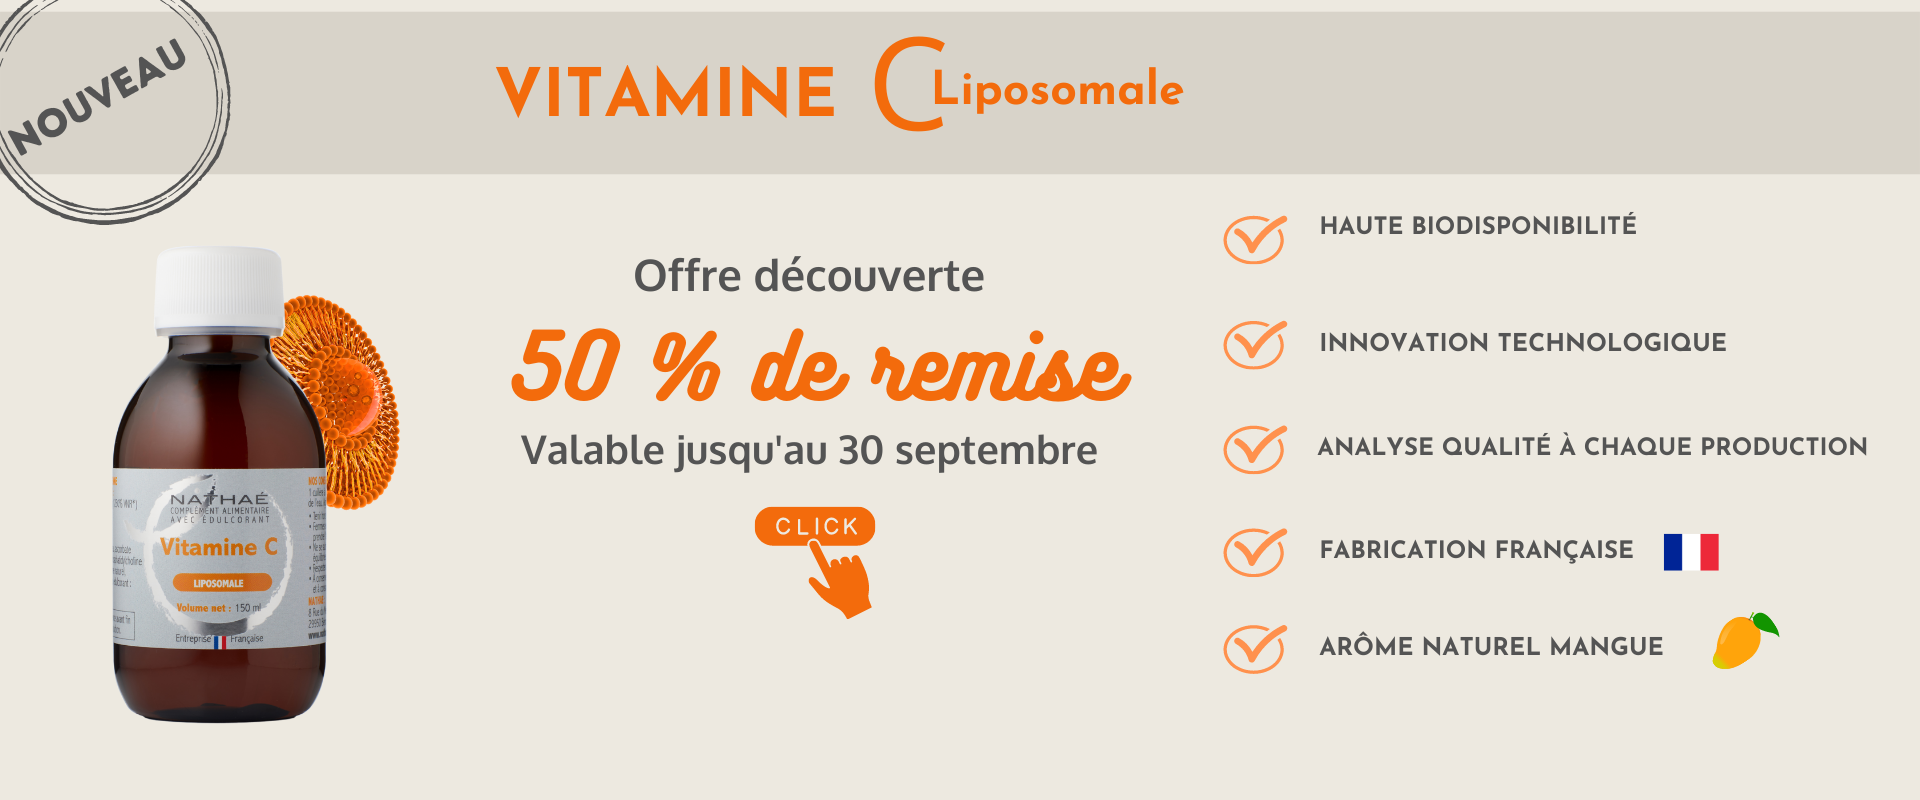 VITAMINE C LIPOSOMALE 150 ML REMISE 50%